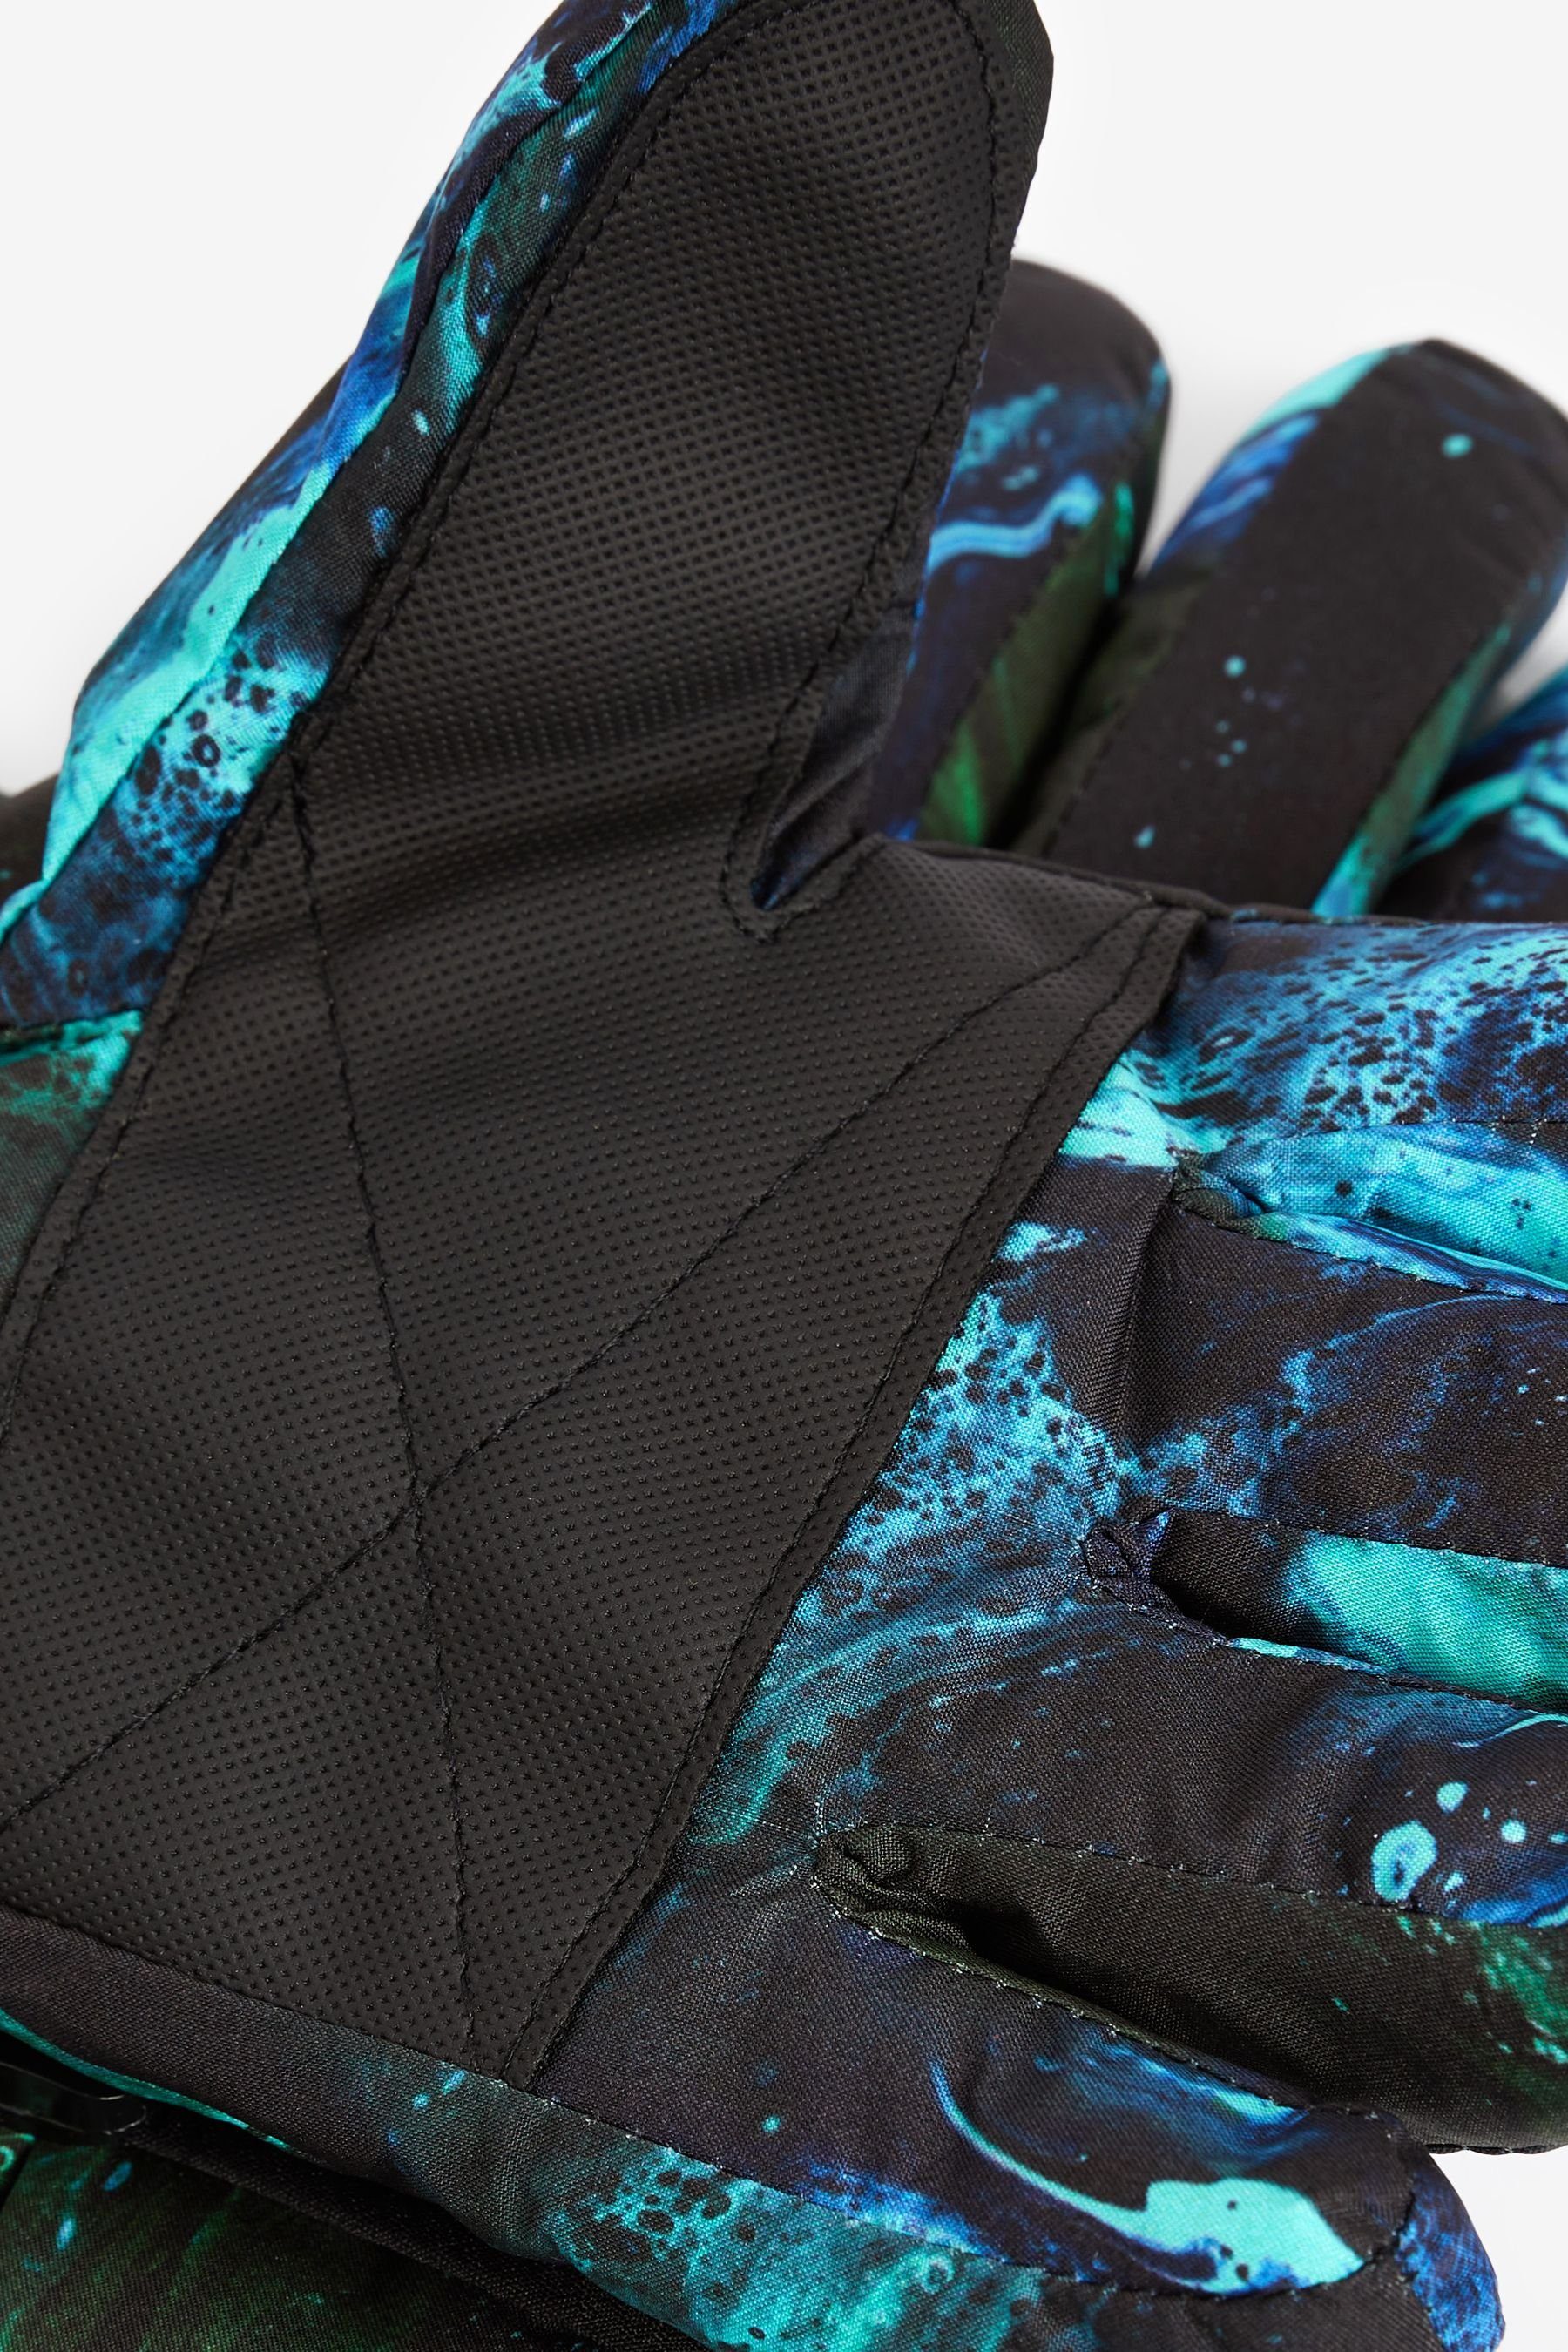 Next Skihandschuhe Ski-Handschuhe Blue Print